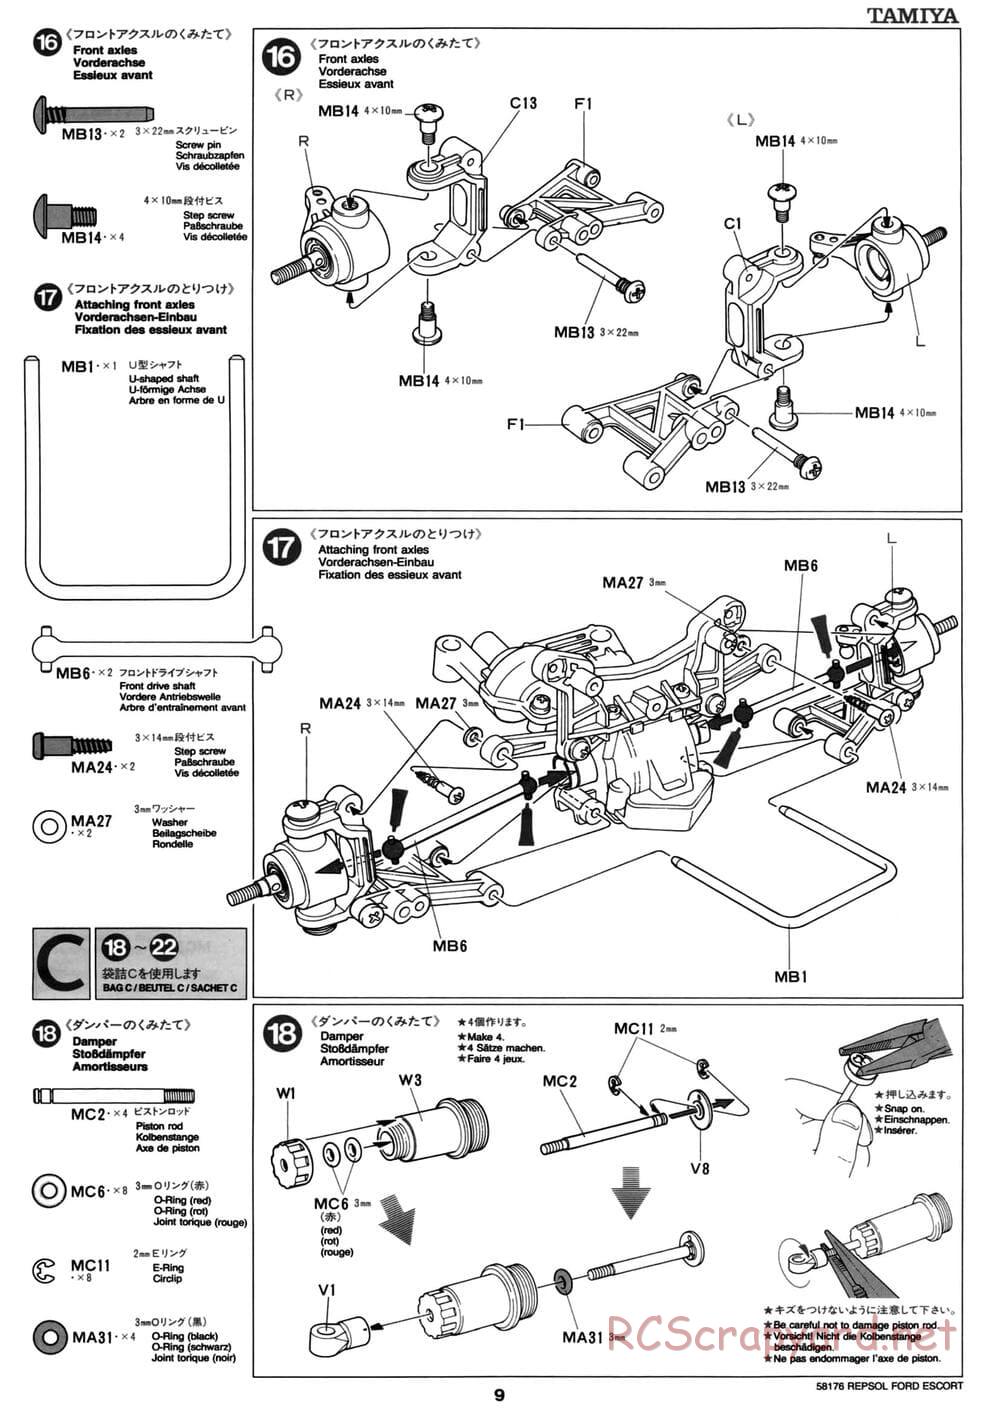 Tamiya - Repsol Ford Escort RS Cosworth - TA-02 Chassis - Manual - Page 9